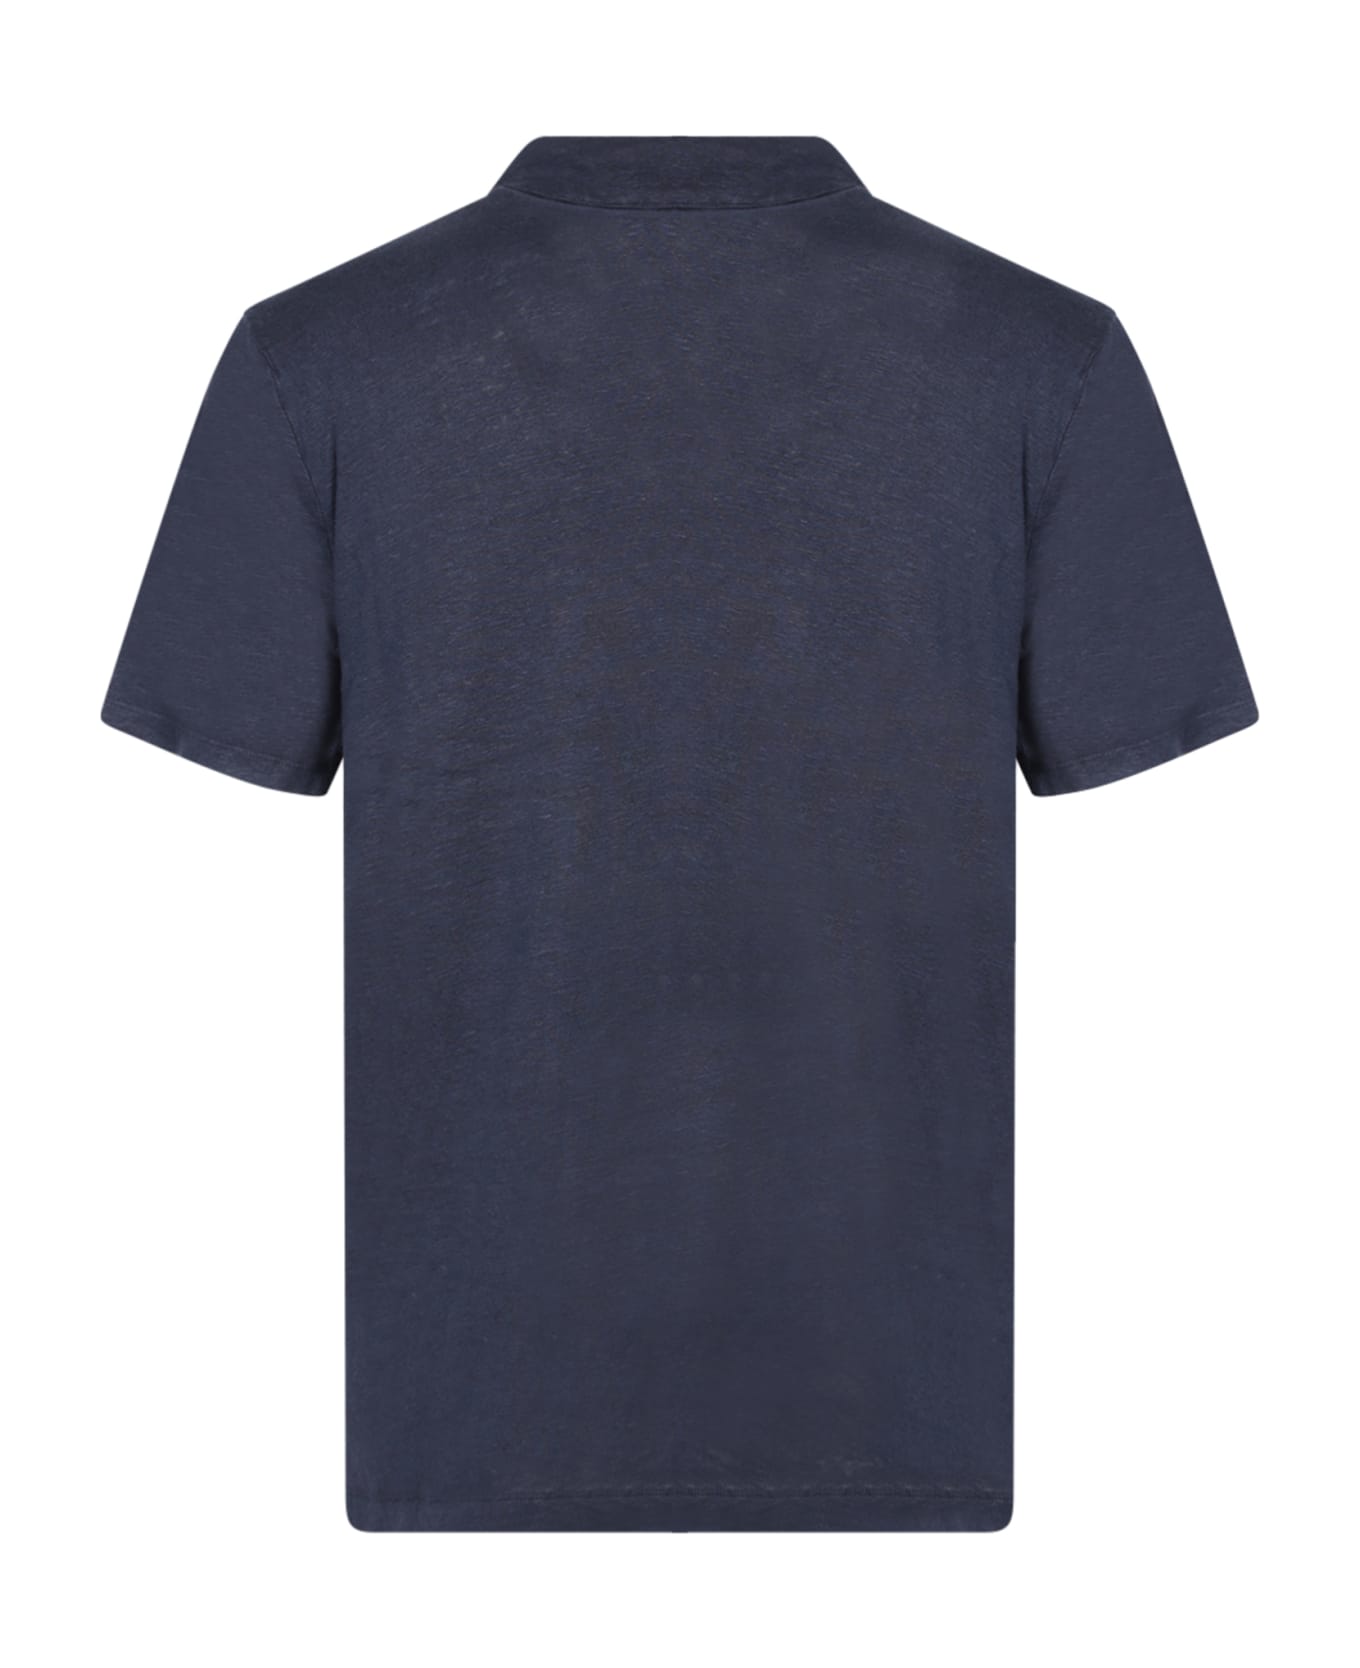 Officine Générale Short Sleeves Blue Polo Shirt - Blue ポロシャツ